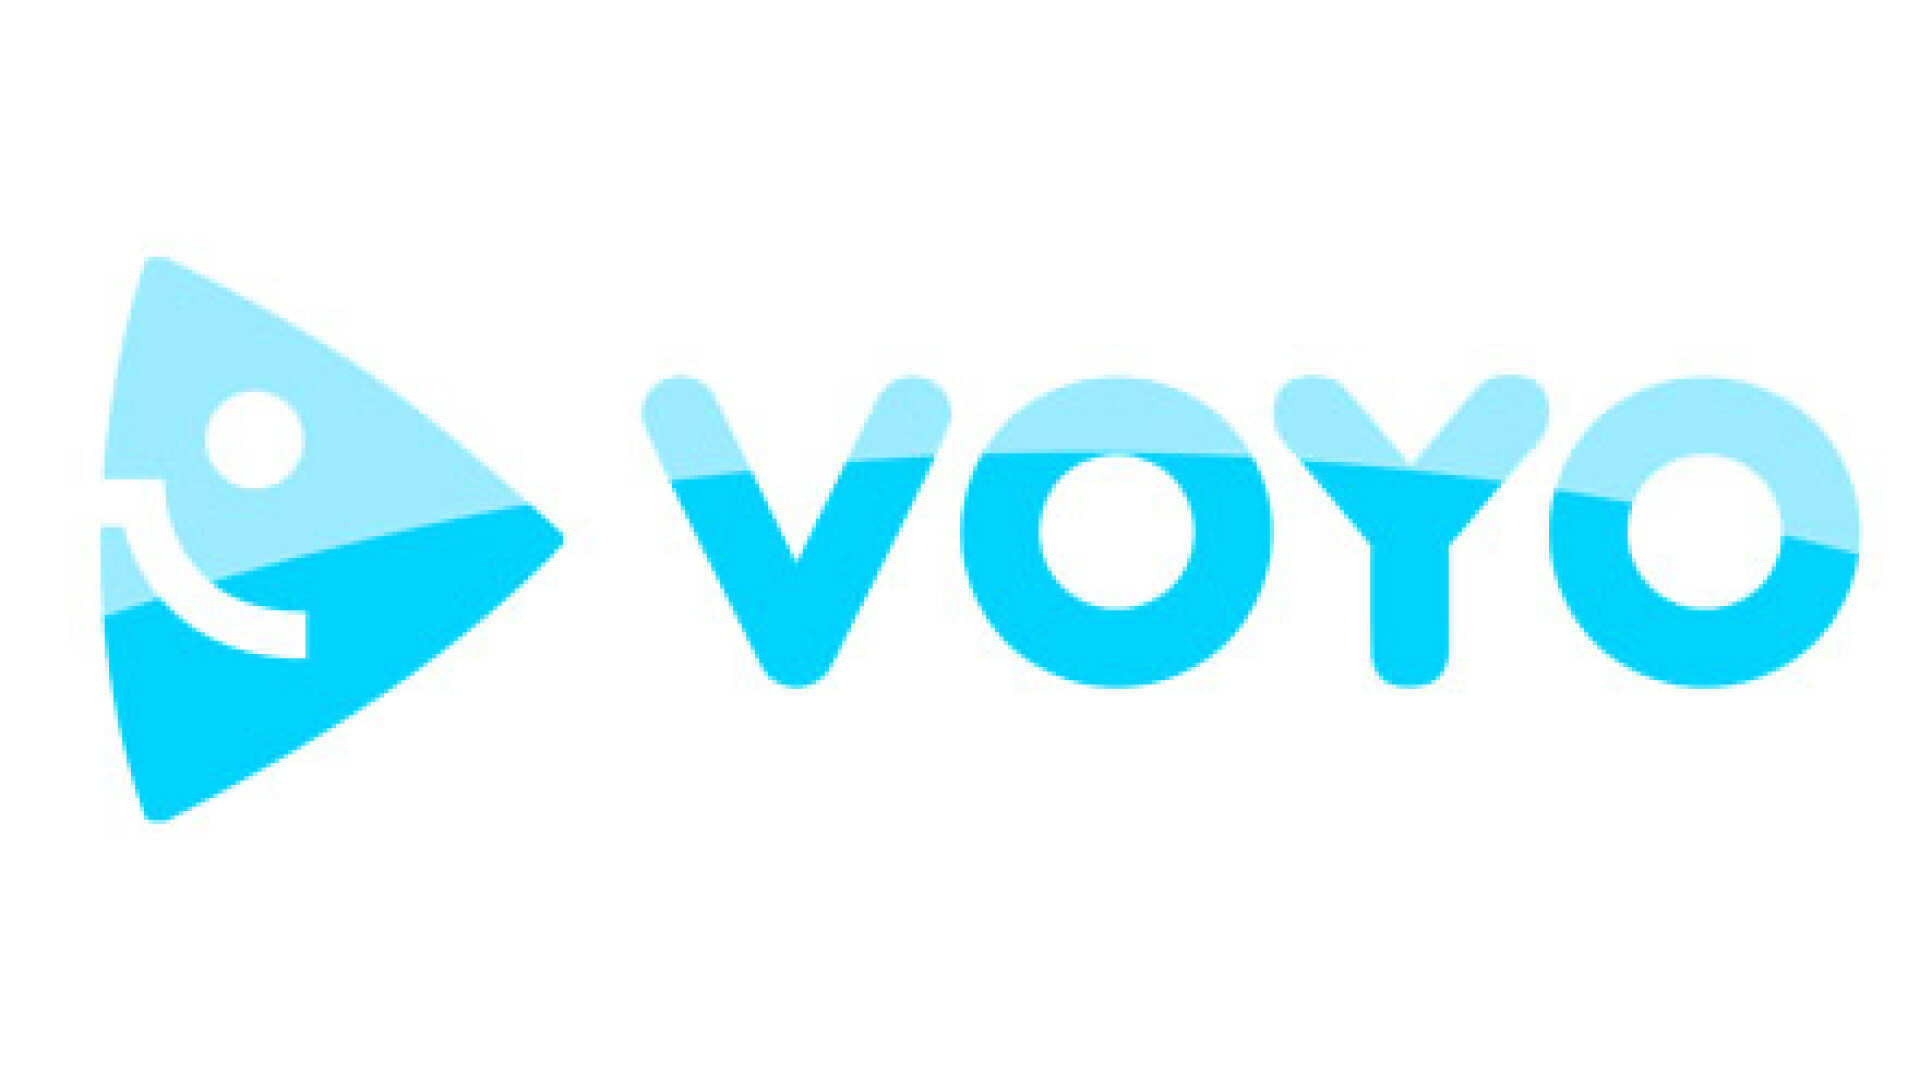 Logo Voyo